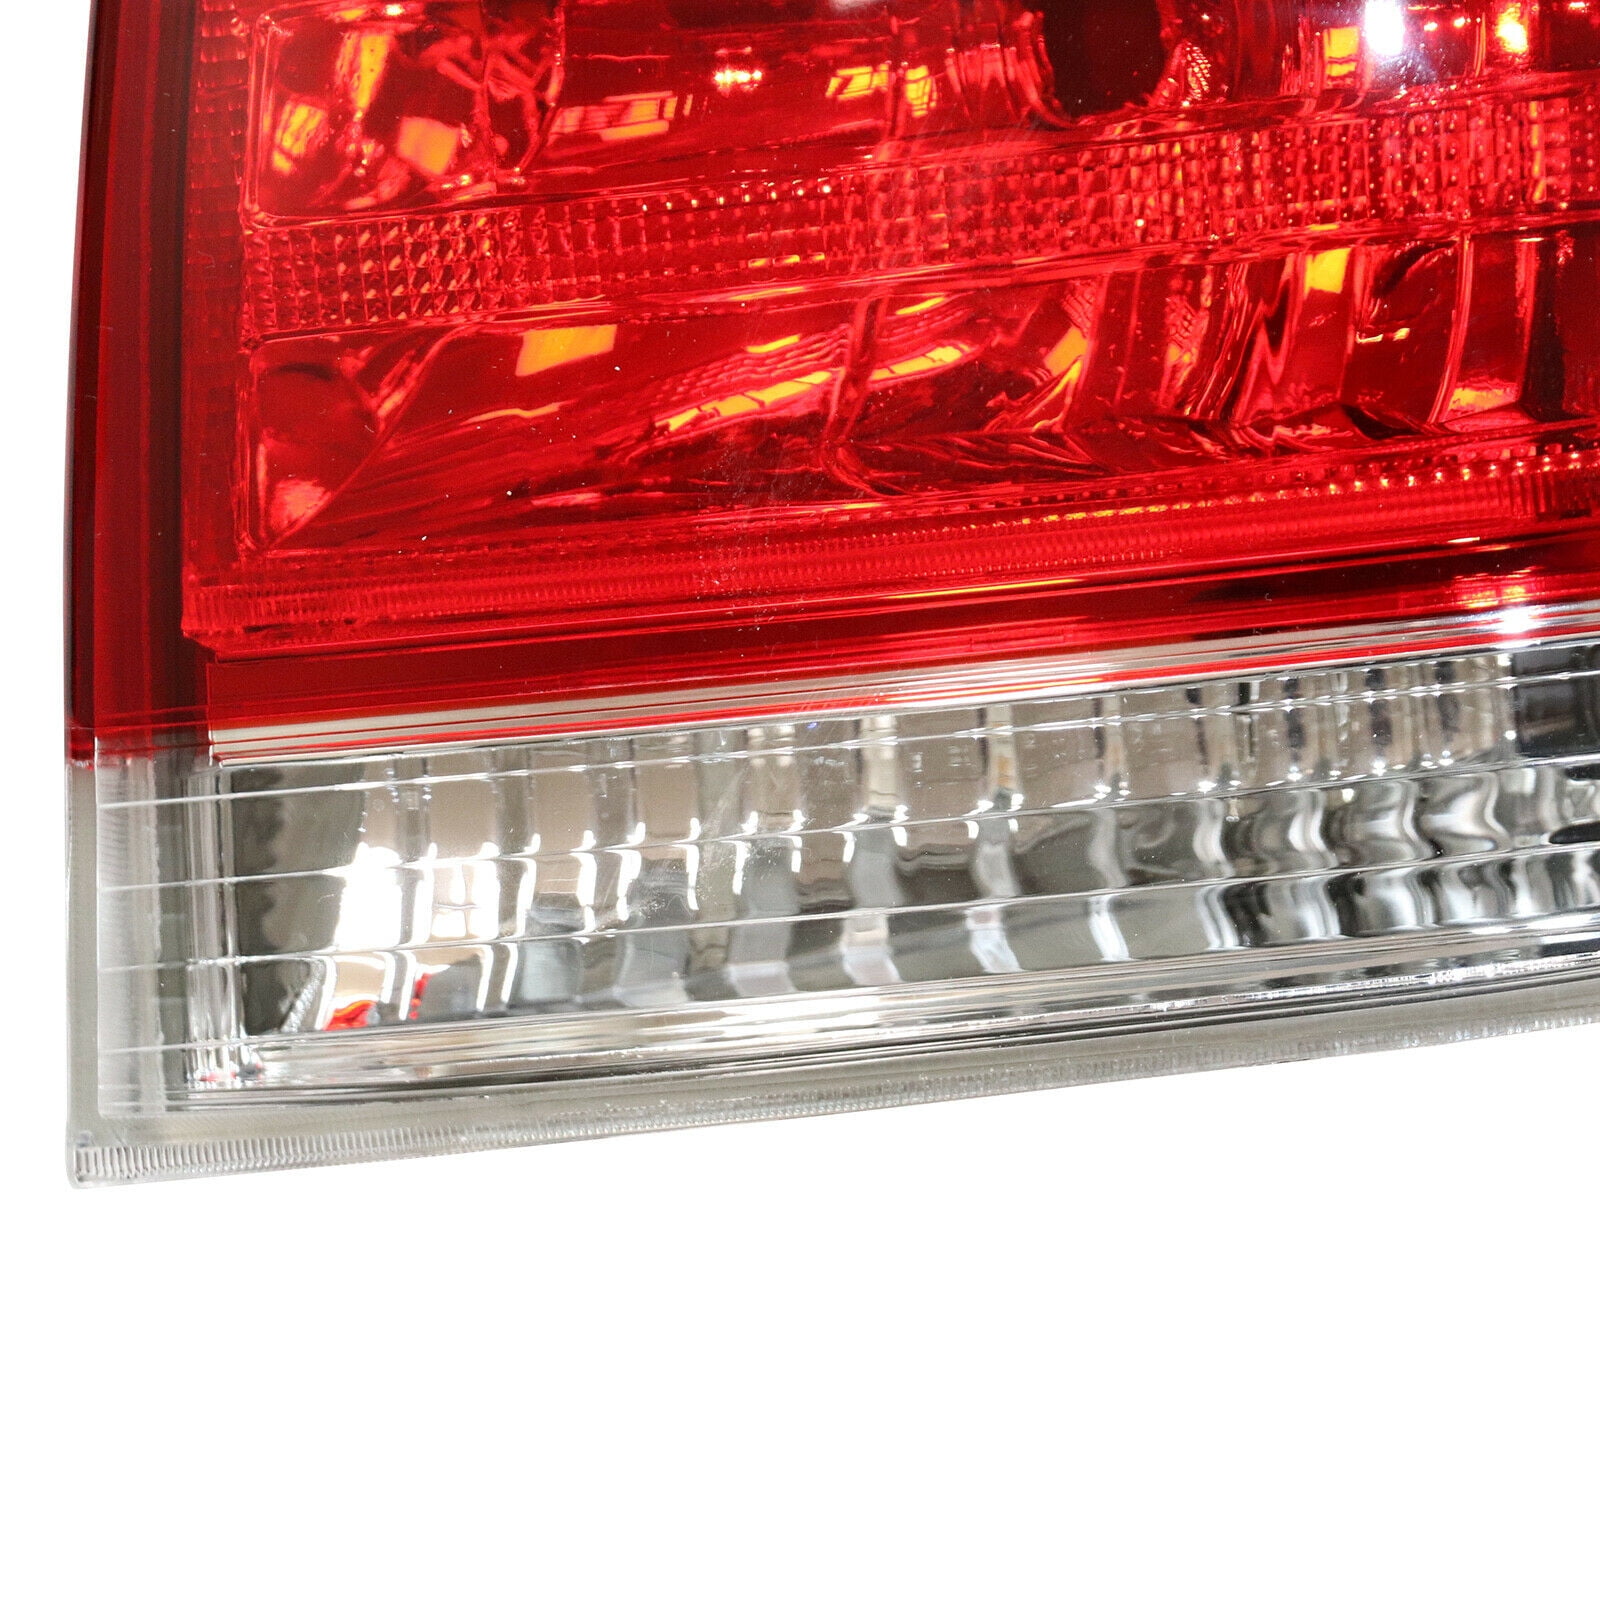 ANQIDI Tail Light for Toyota Highlander 2011-2013 Right Passenger